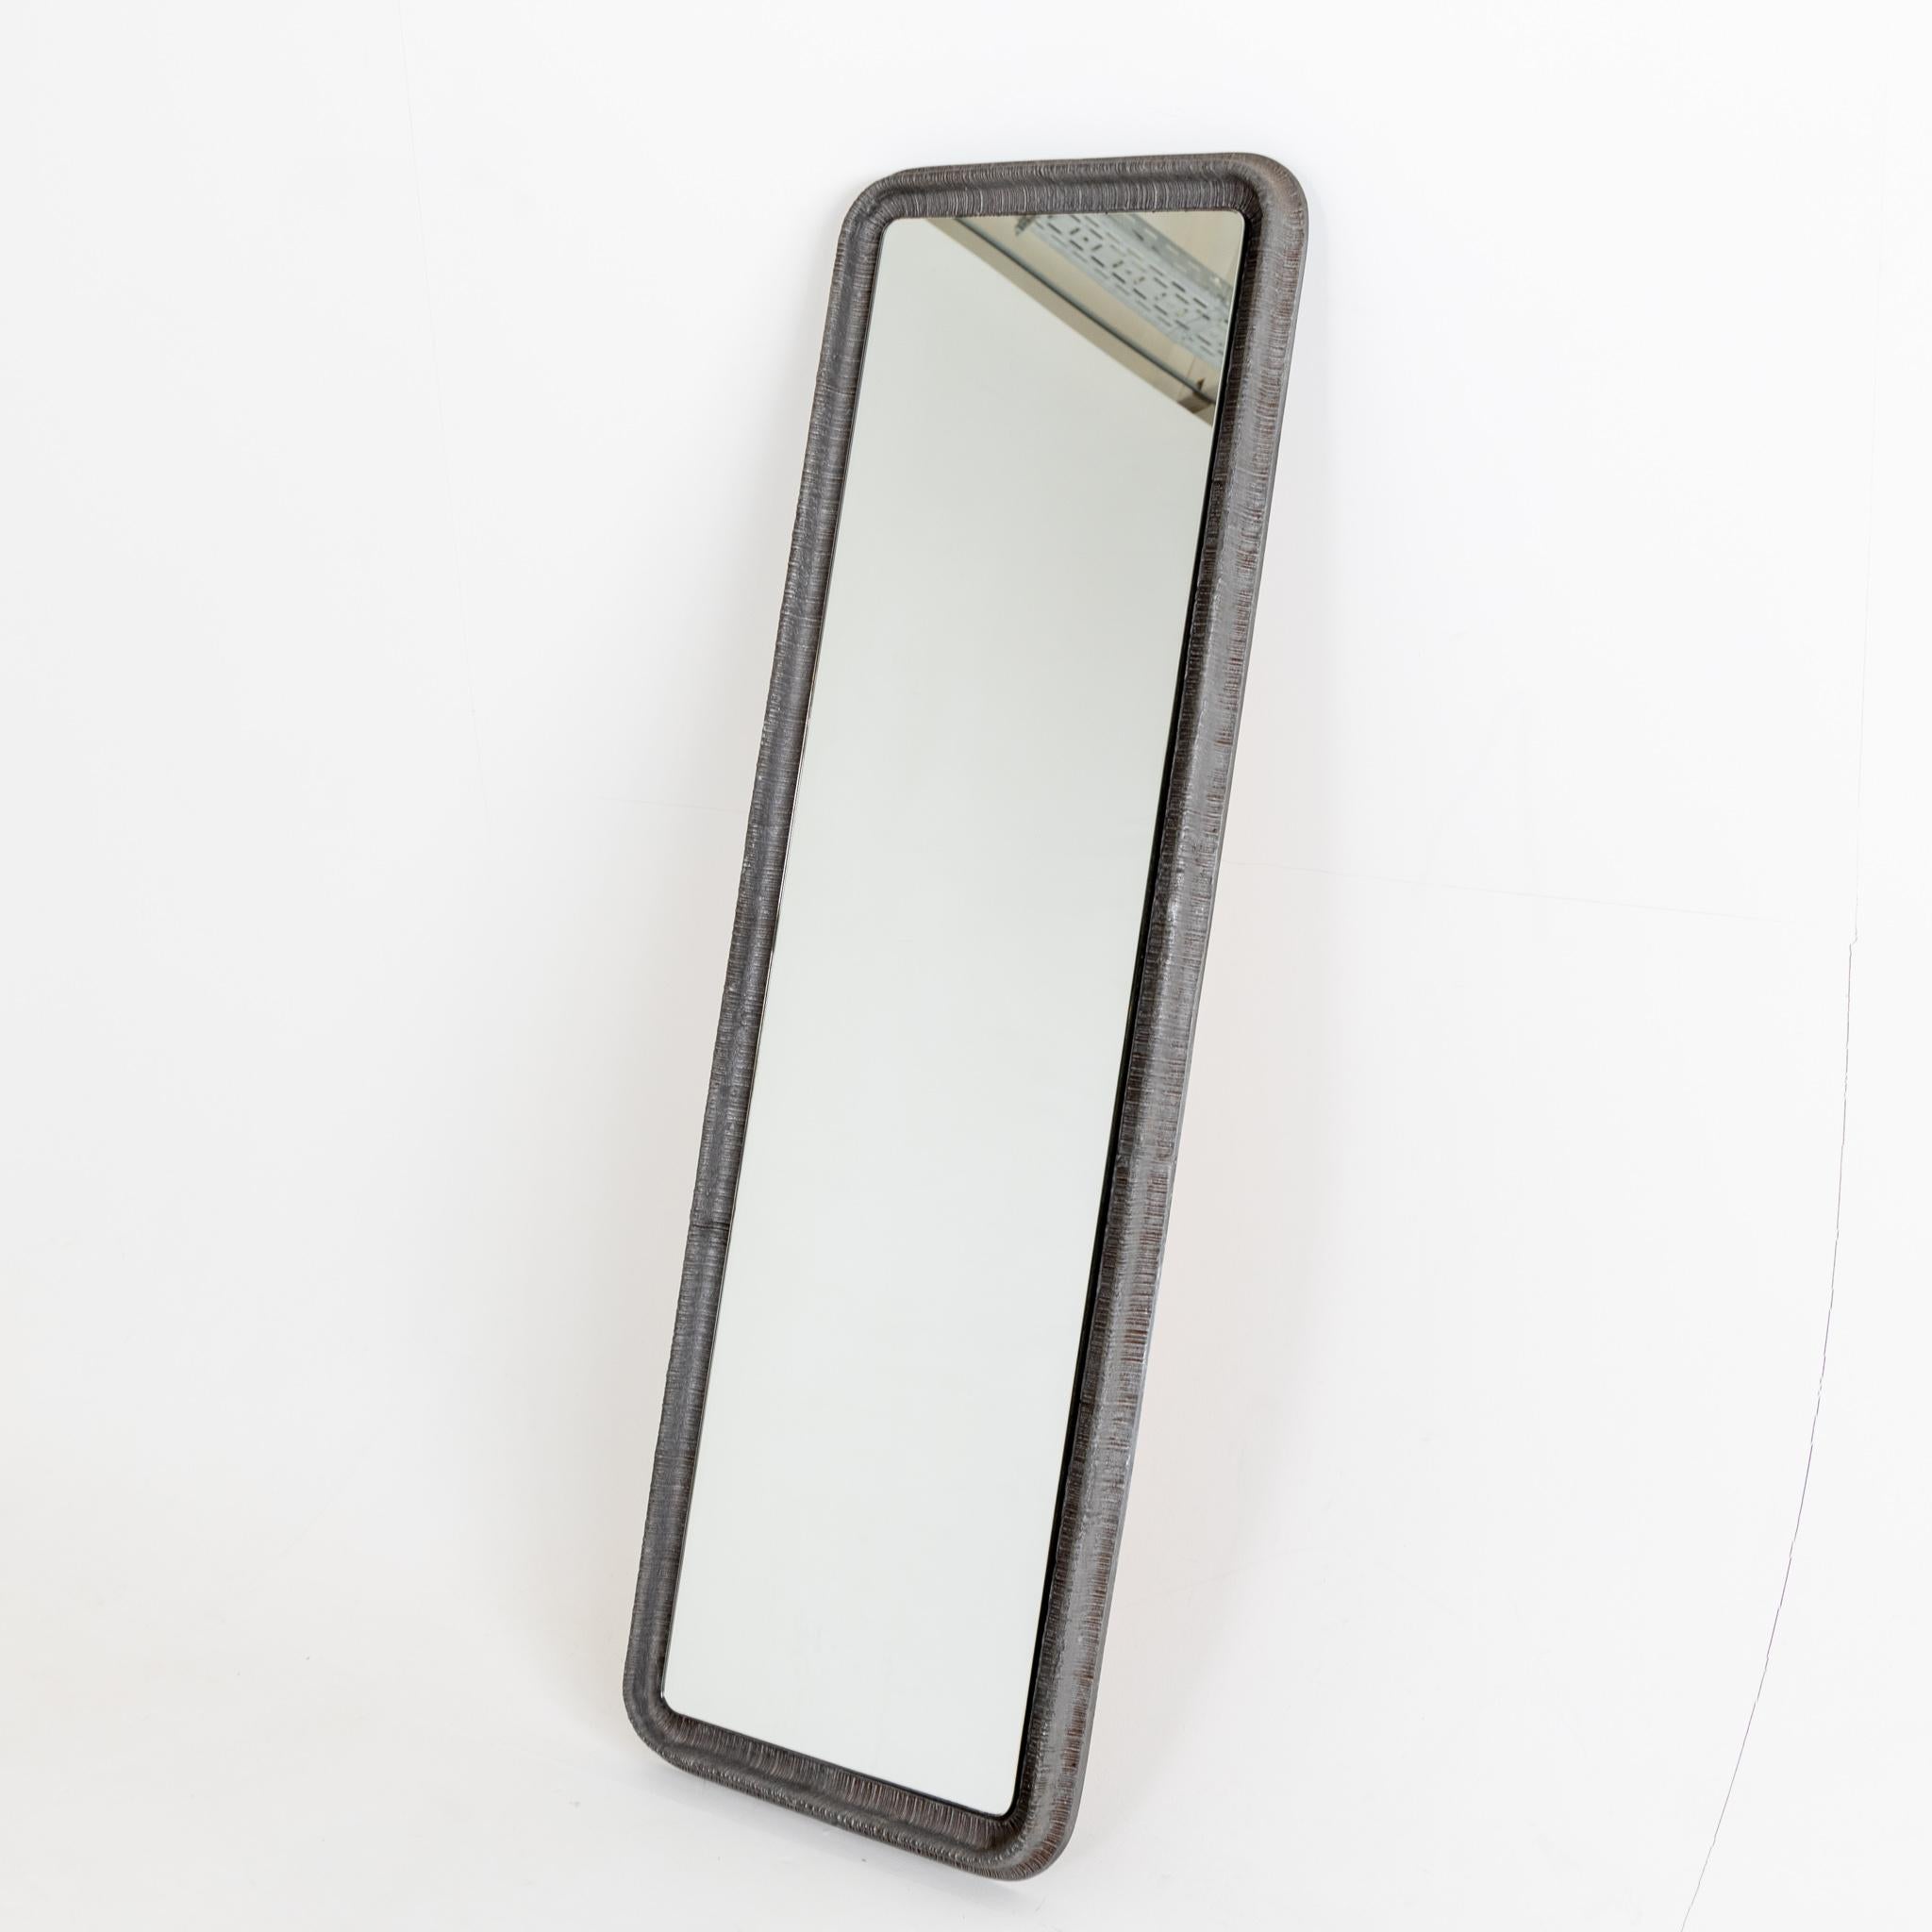 Tall sculptural Modernist mirror by artist Lorenzo Burchiellaro. 
Textured cast aluminum. Signed Burchiellaro.